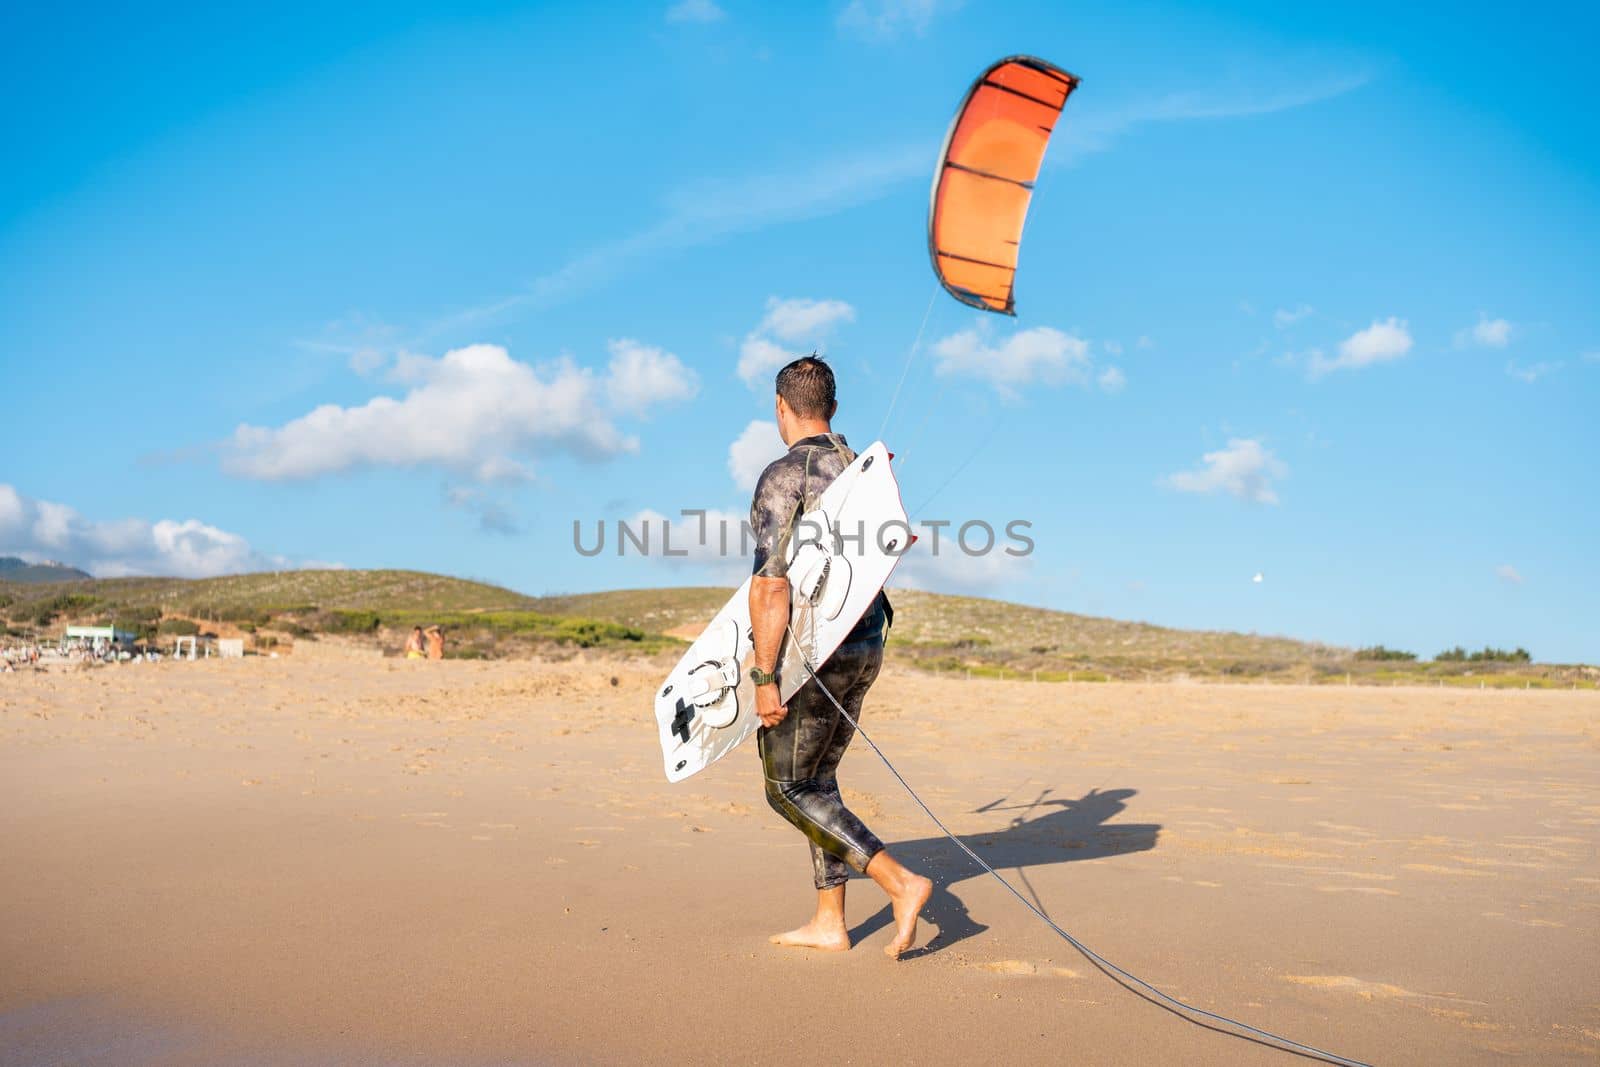 Portrait wave kitesurfer walking upwind at beach with his board and kite. Man kite surfer walk sand ocean beach with his kite surf board.